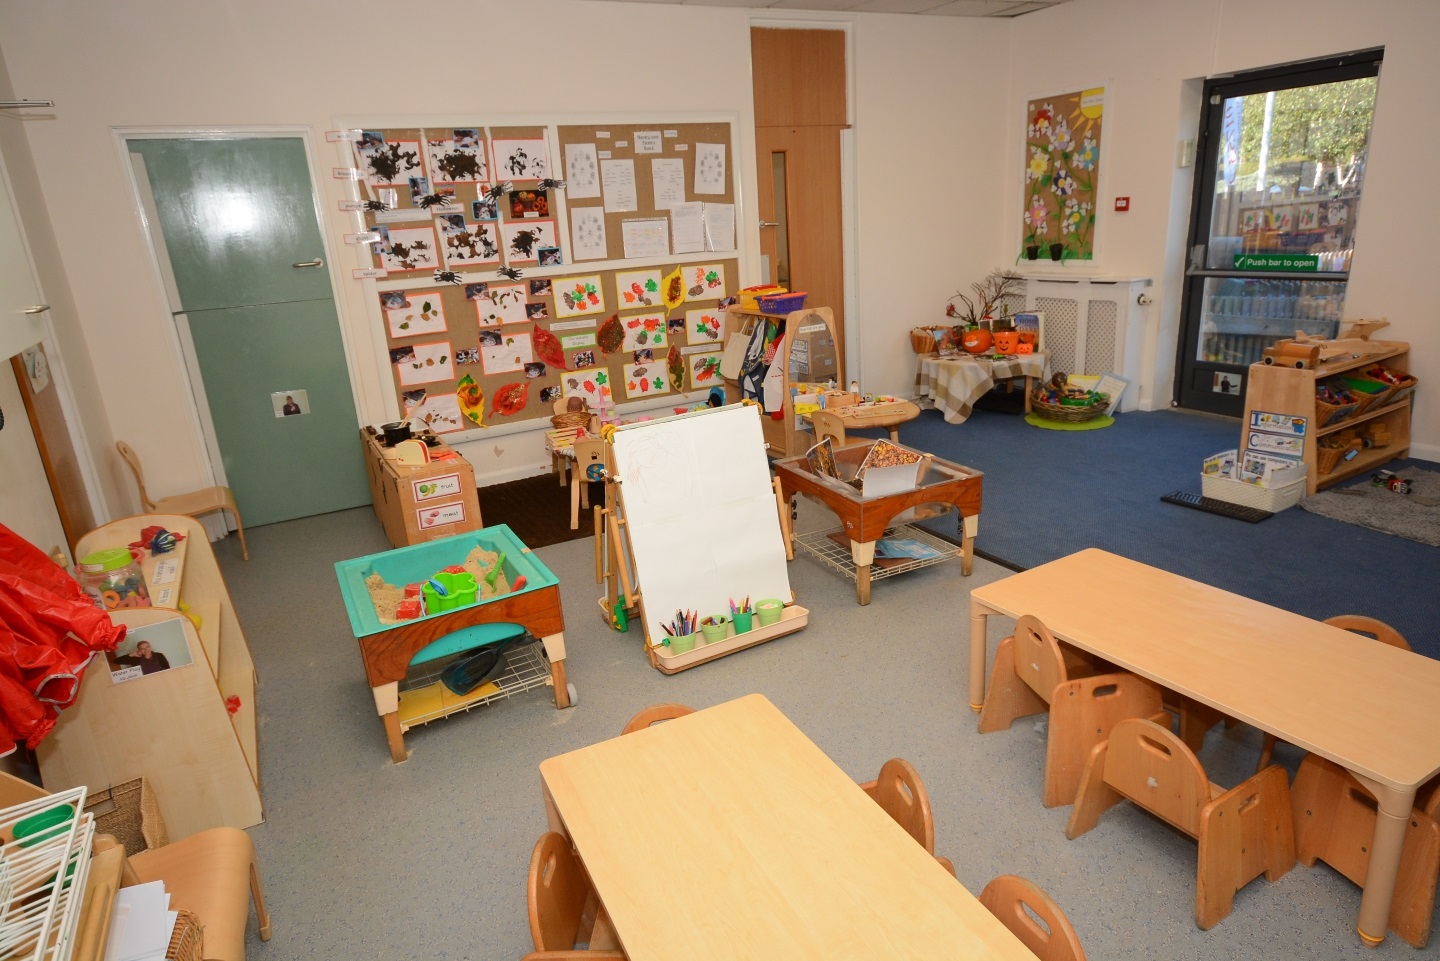 Asquith Bristol Day Nursery and Preschool